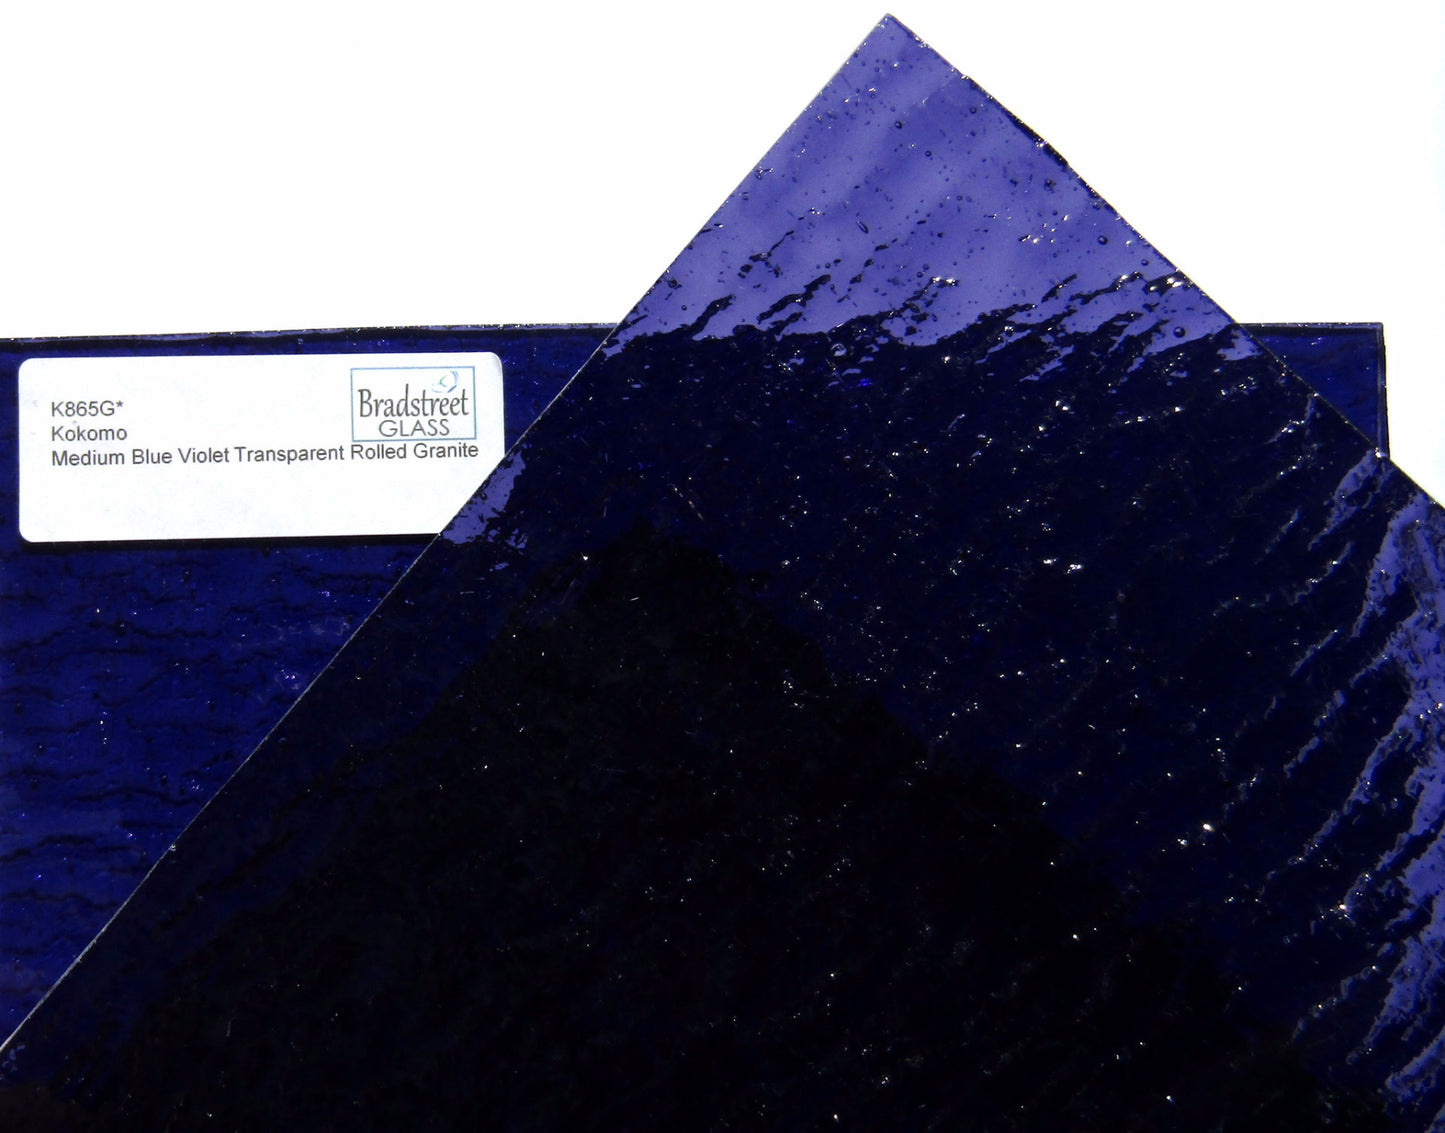 Kokomo 865G Medium Blue Violet Transparent Rolled Granite Stained Glass Sheet